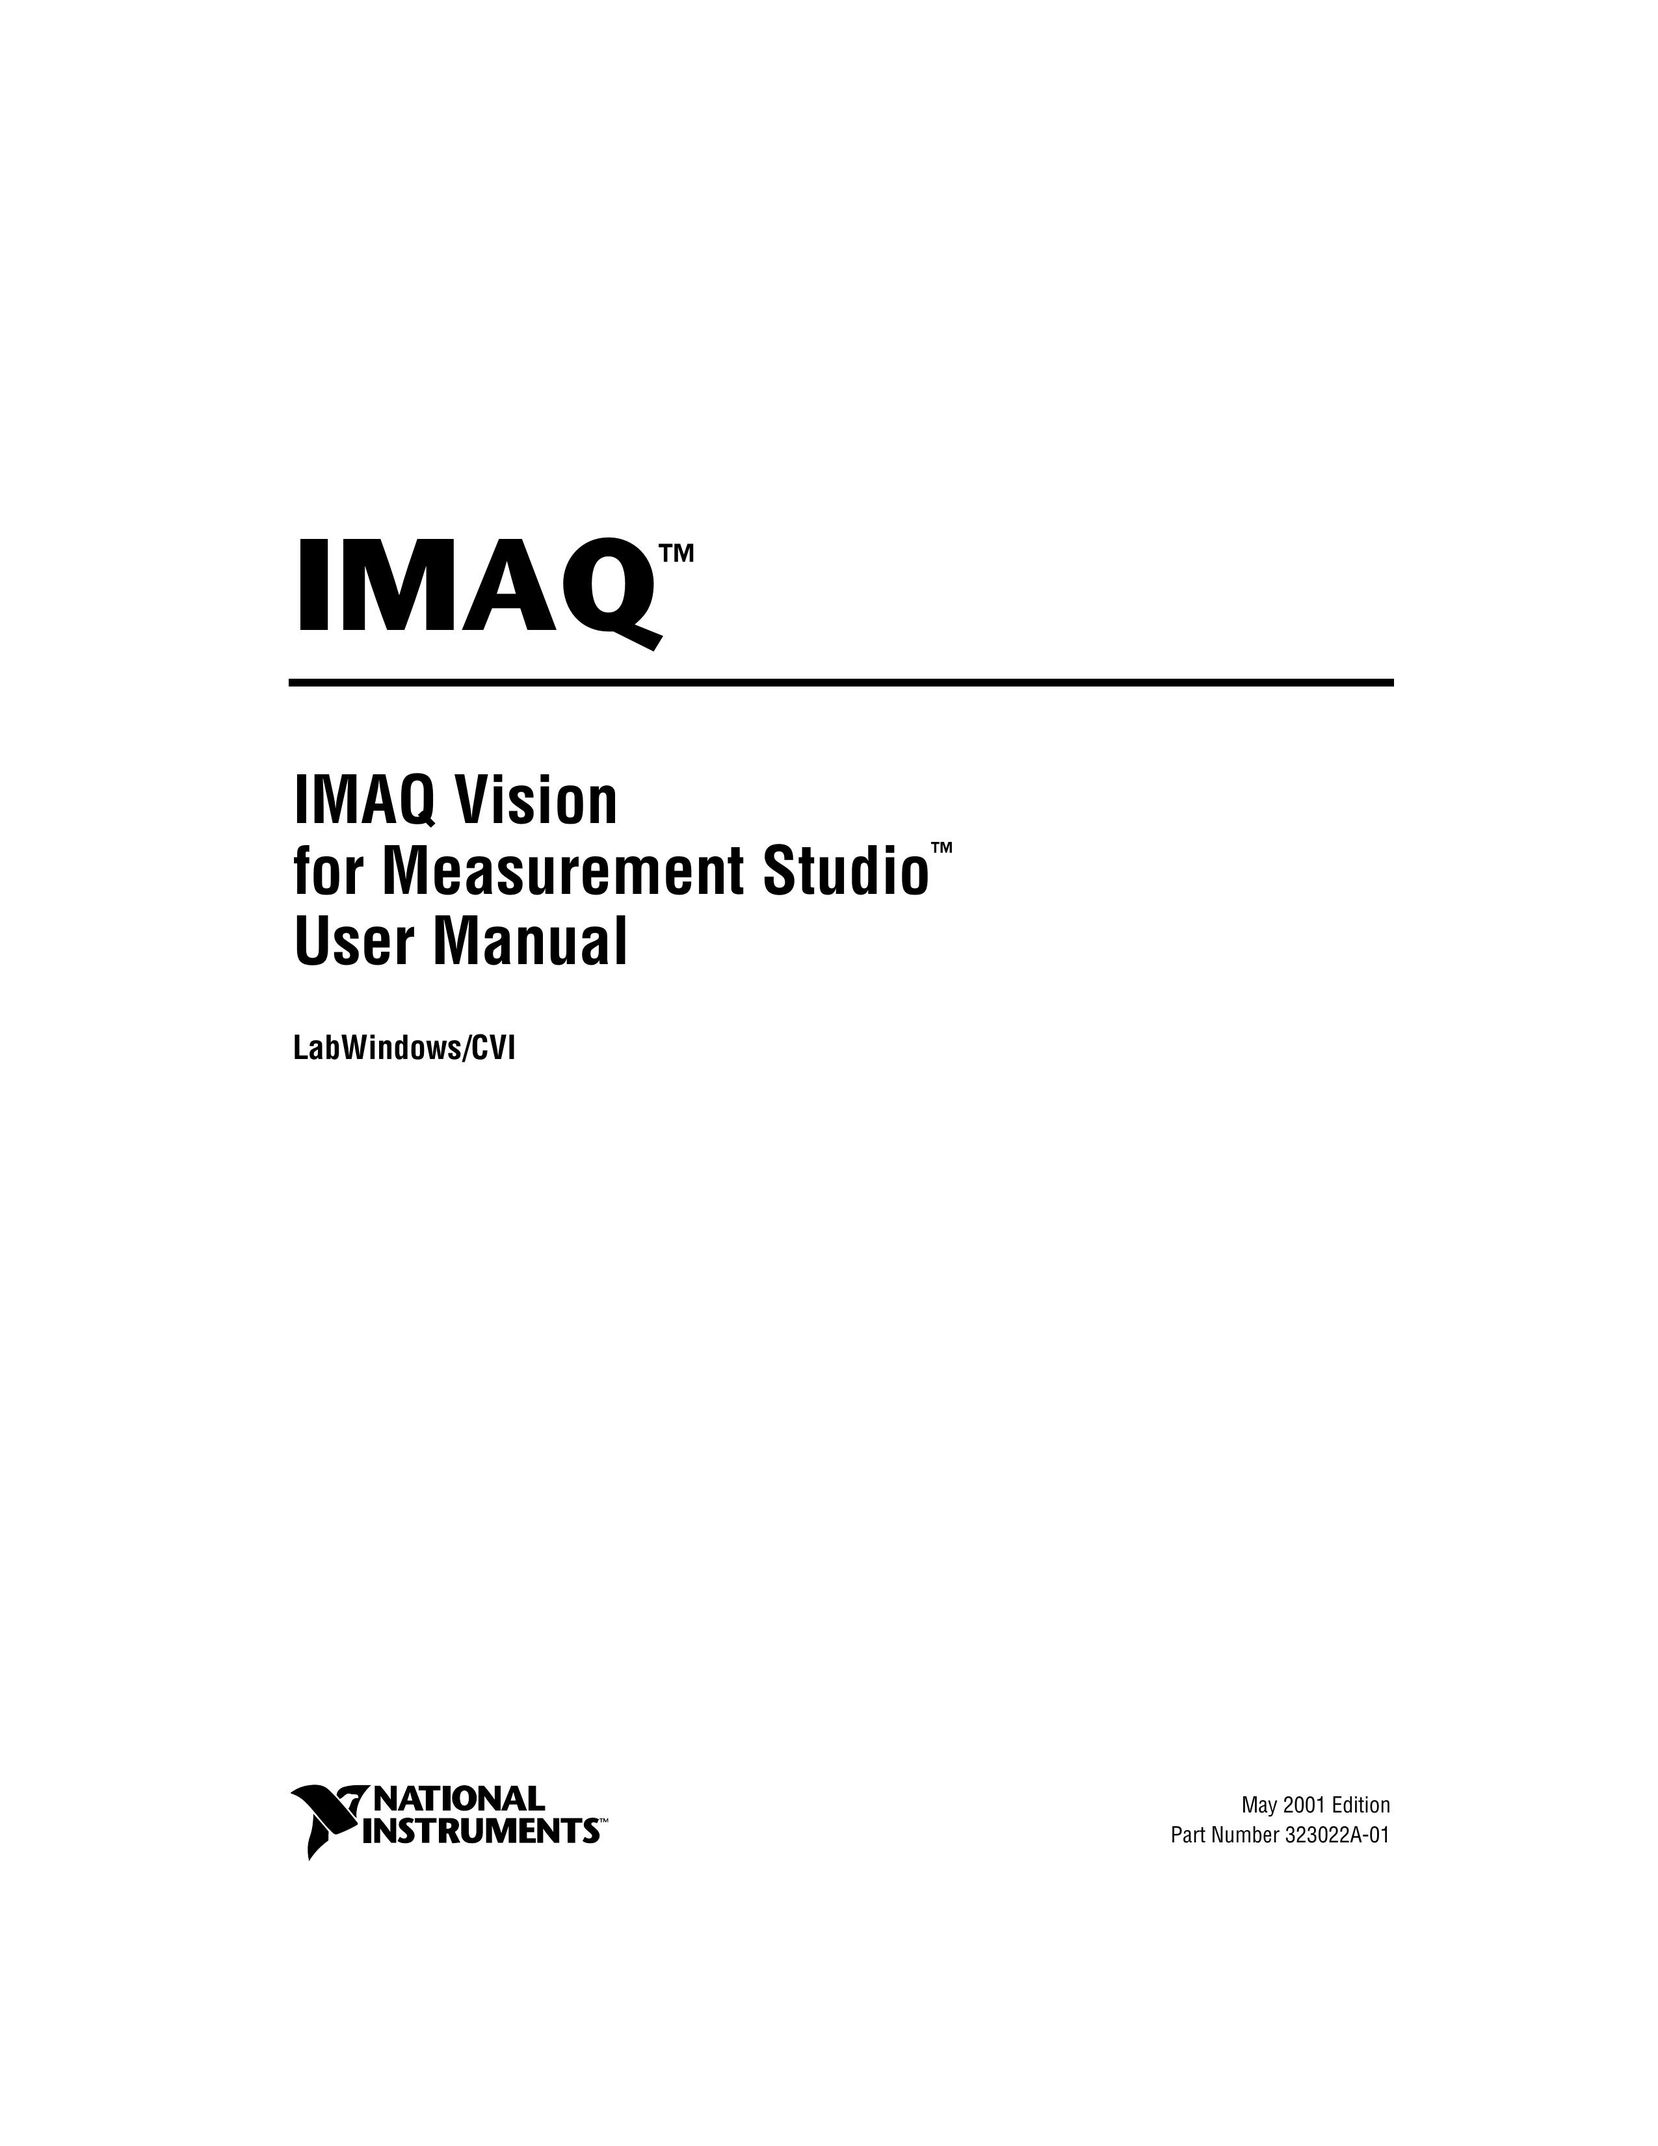 National Instruments IMAQ Vision for Measurement Studio Network Card User Manual